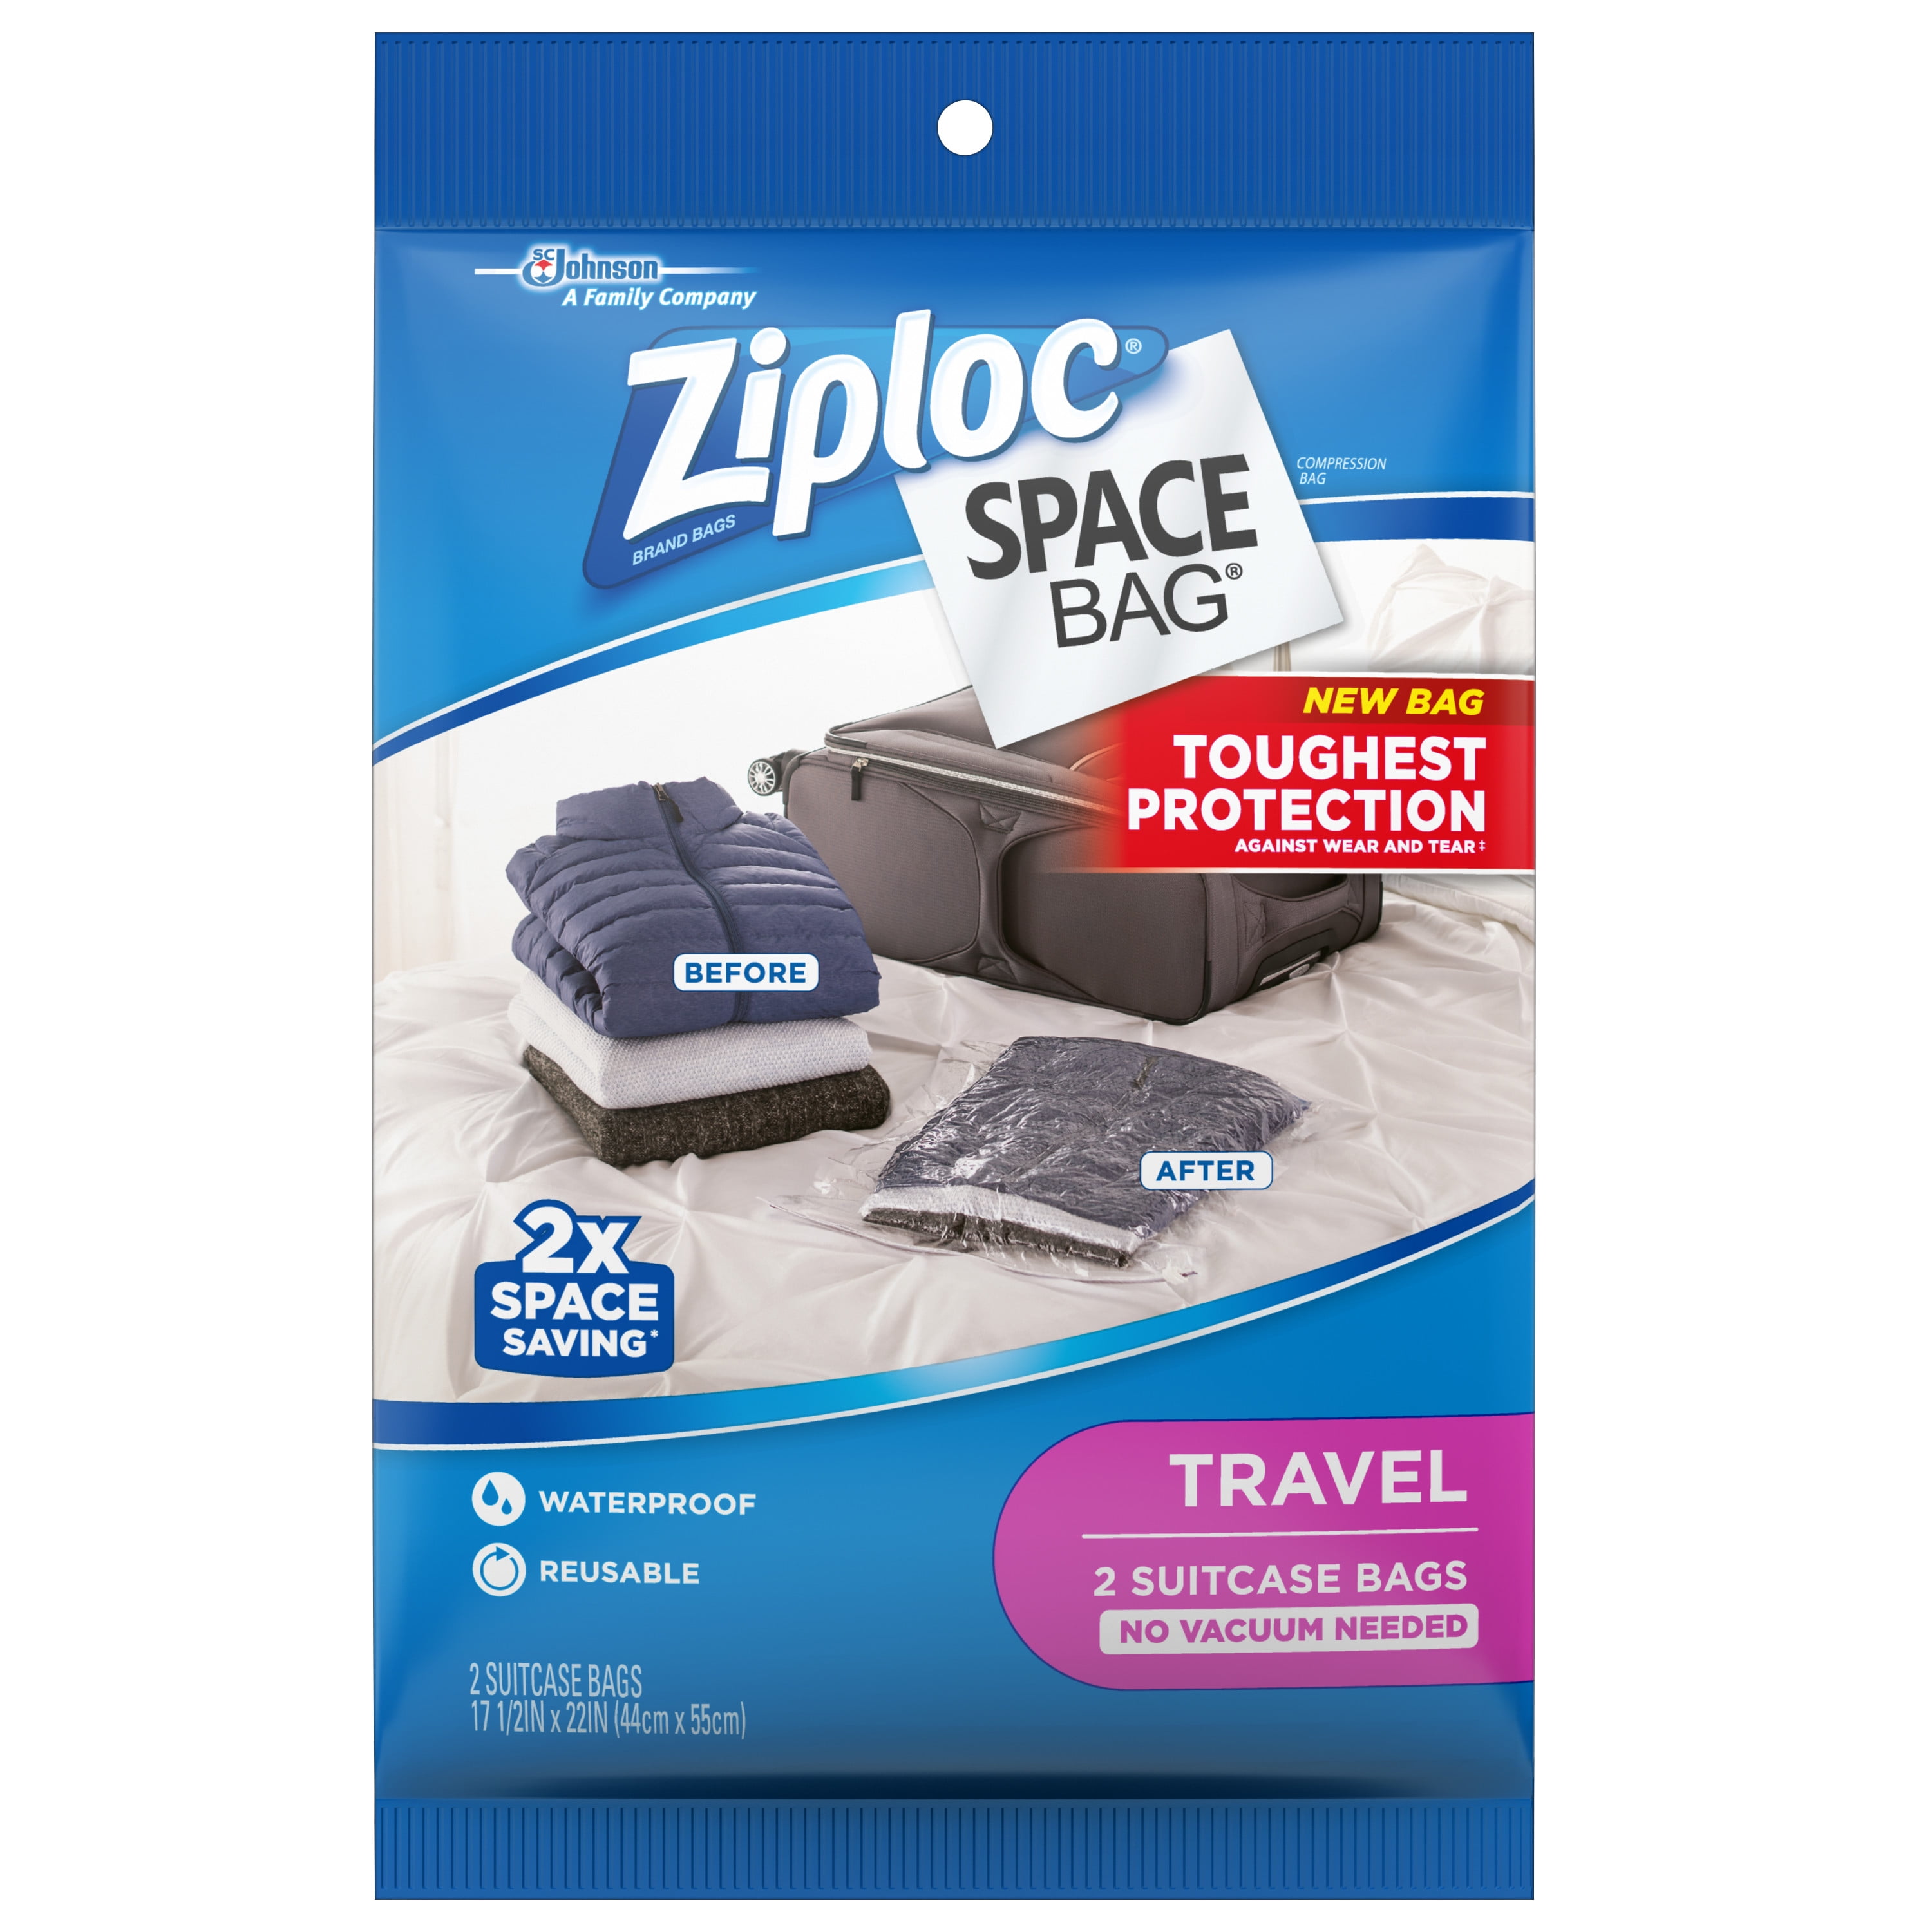 ziploc bags for travel